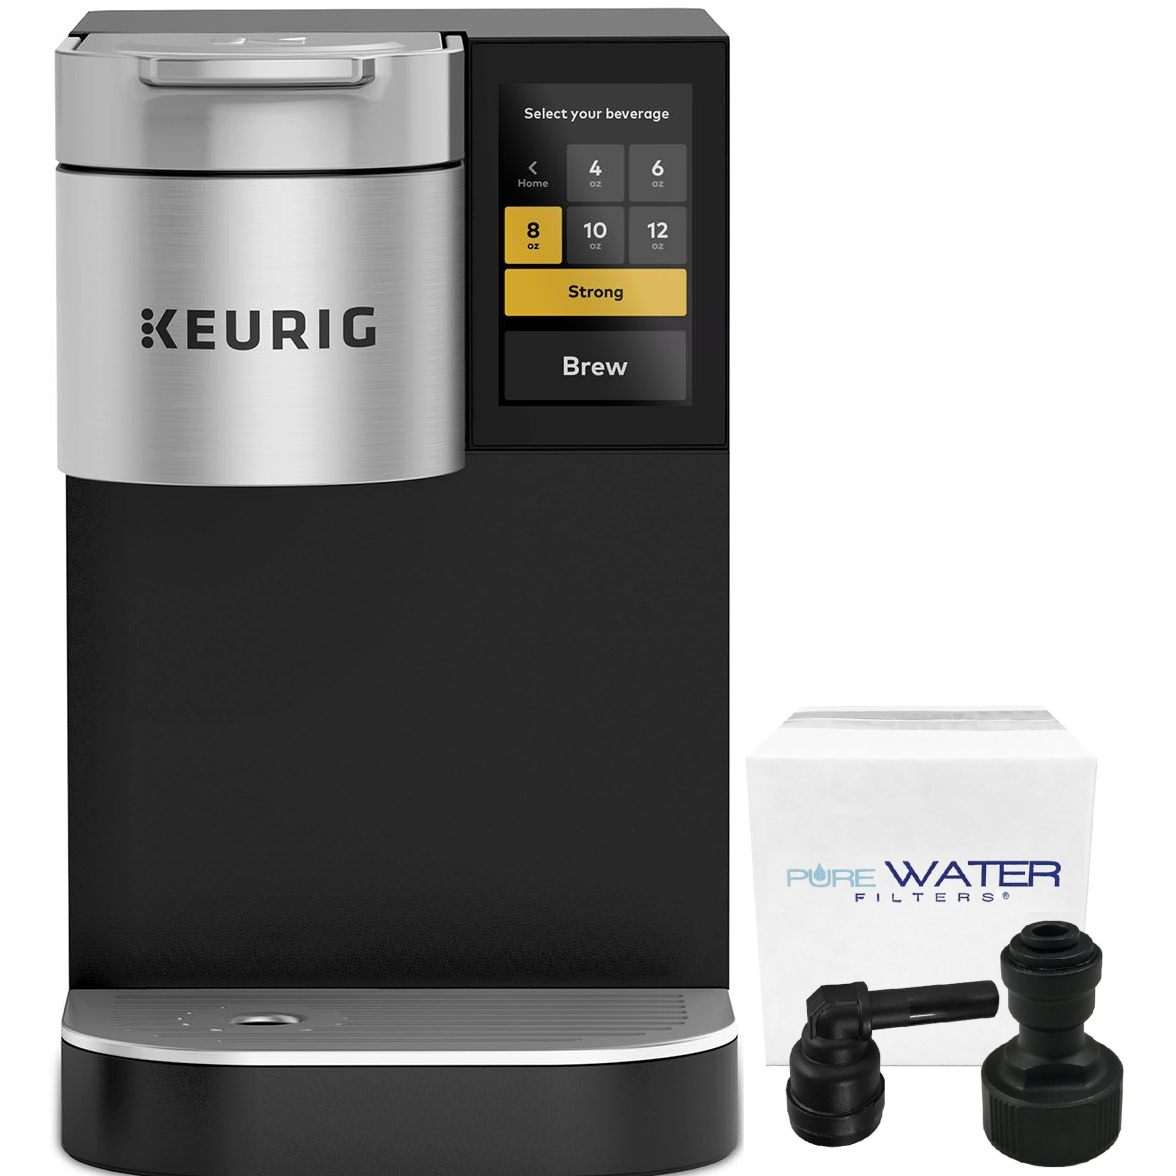 Keurig K2500 - Single-Serve Commercial Coffee Maker with Water Reservoir